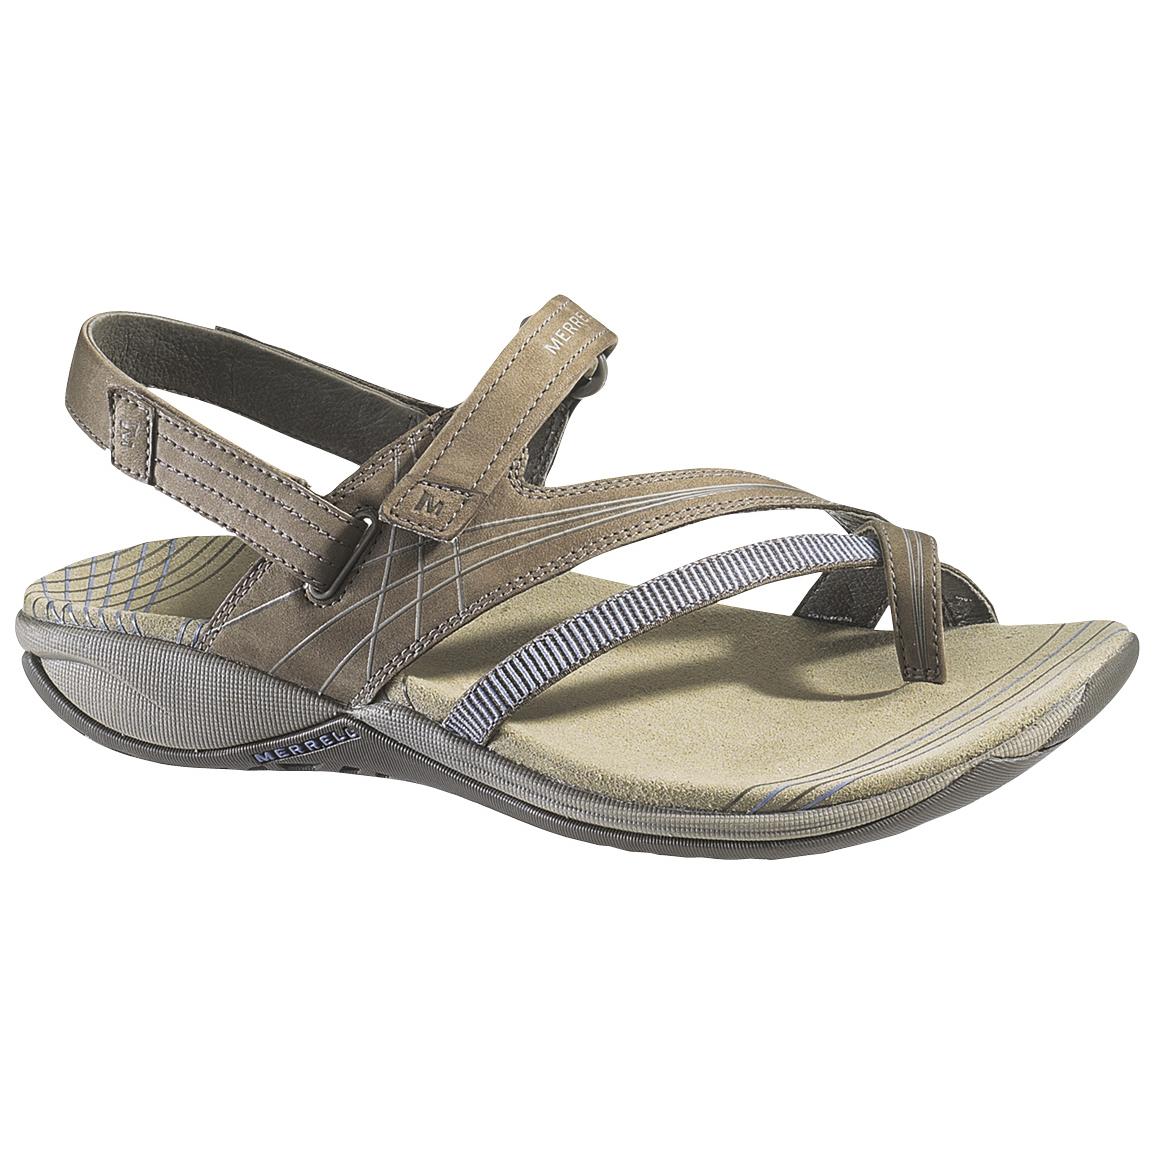 merrell sandals for women